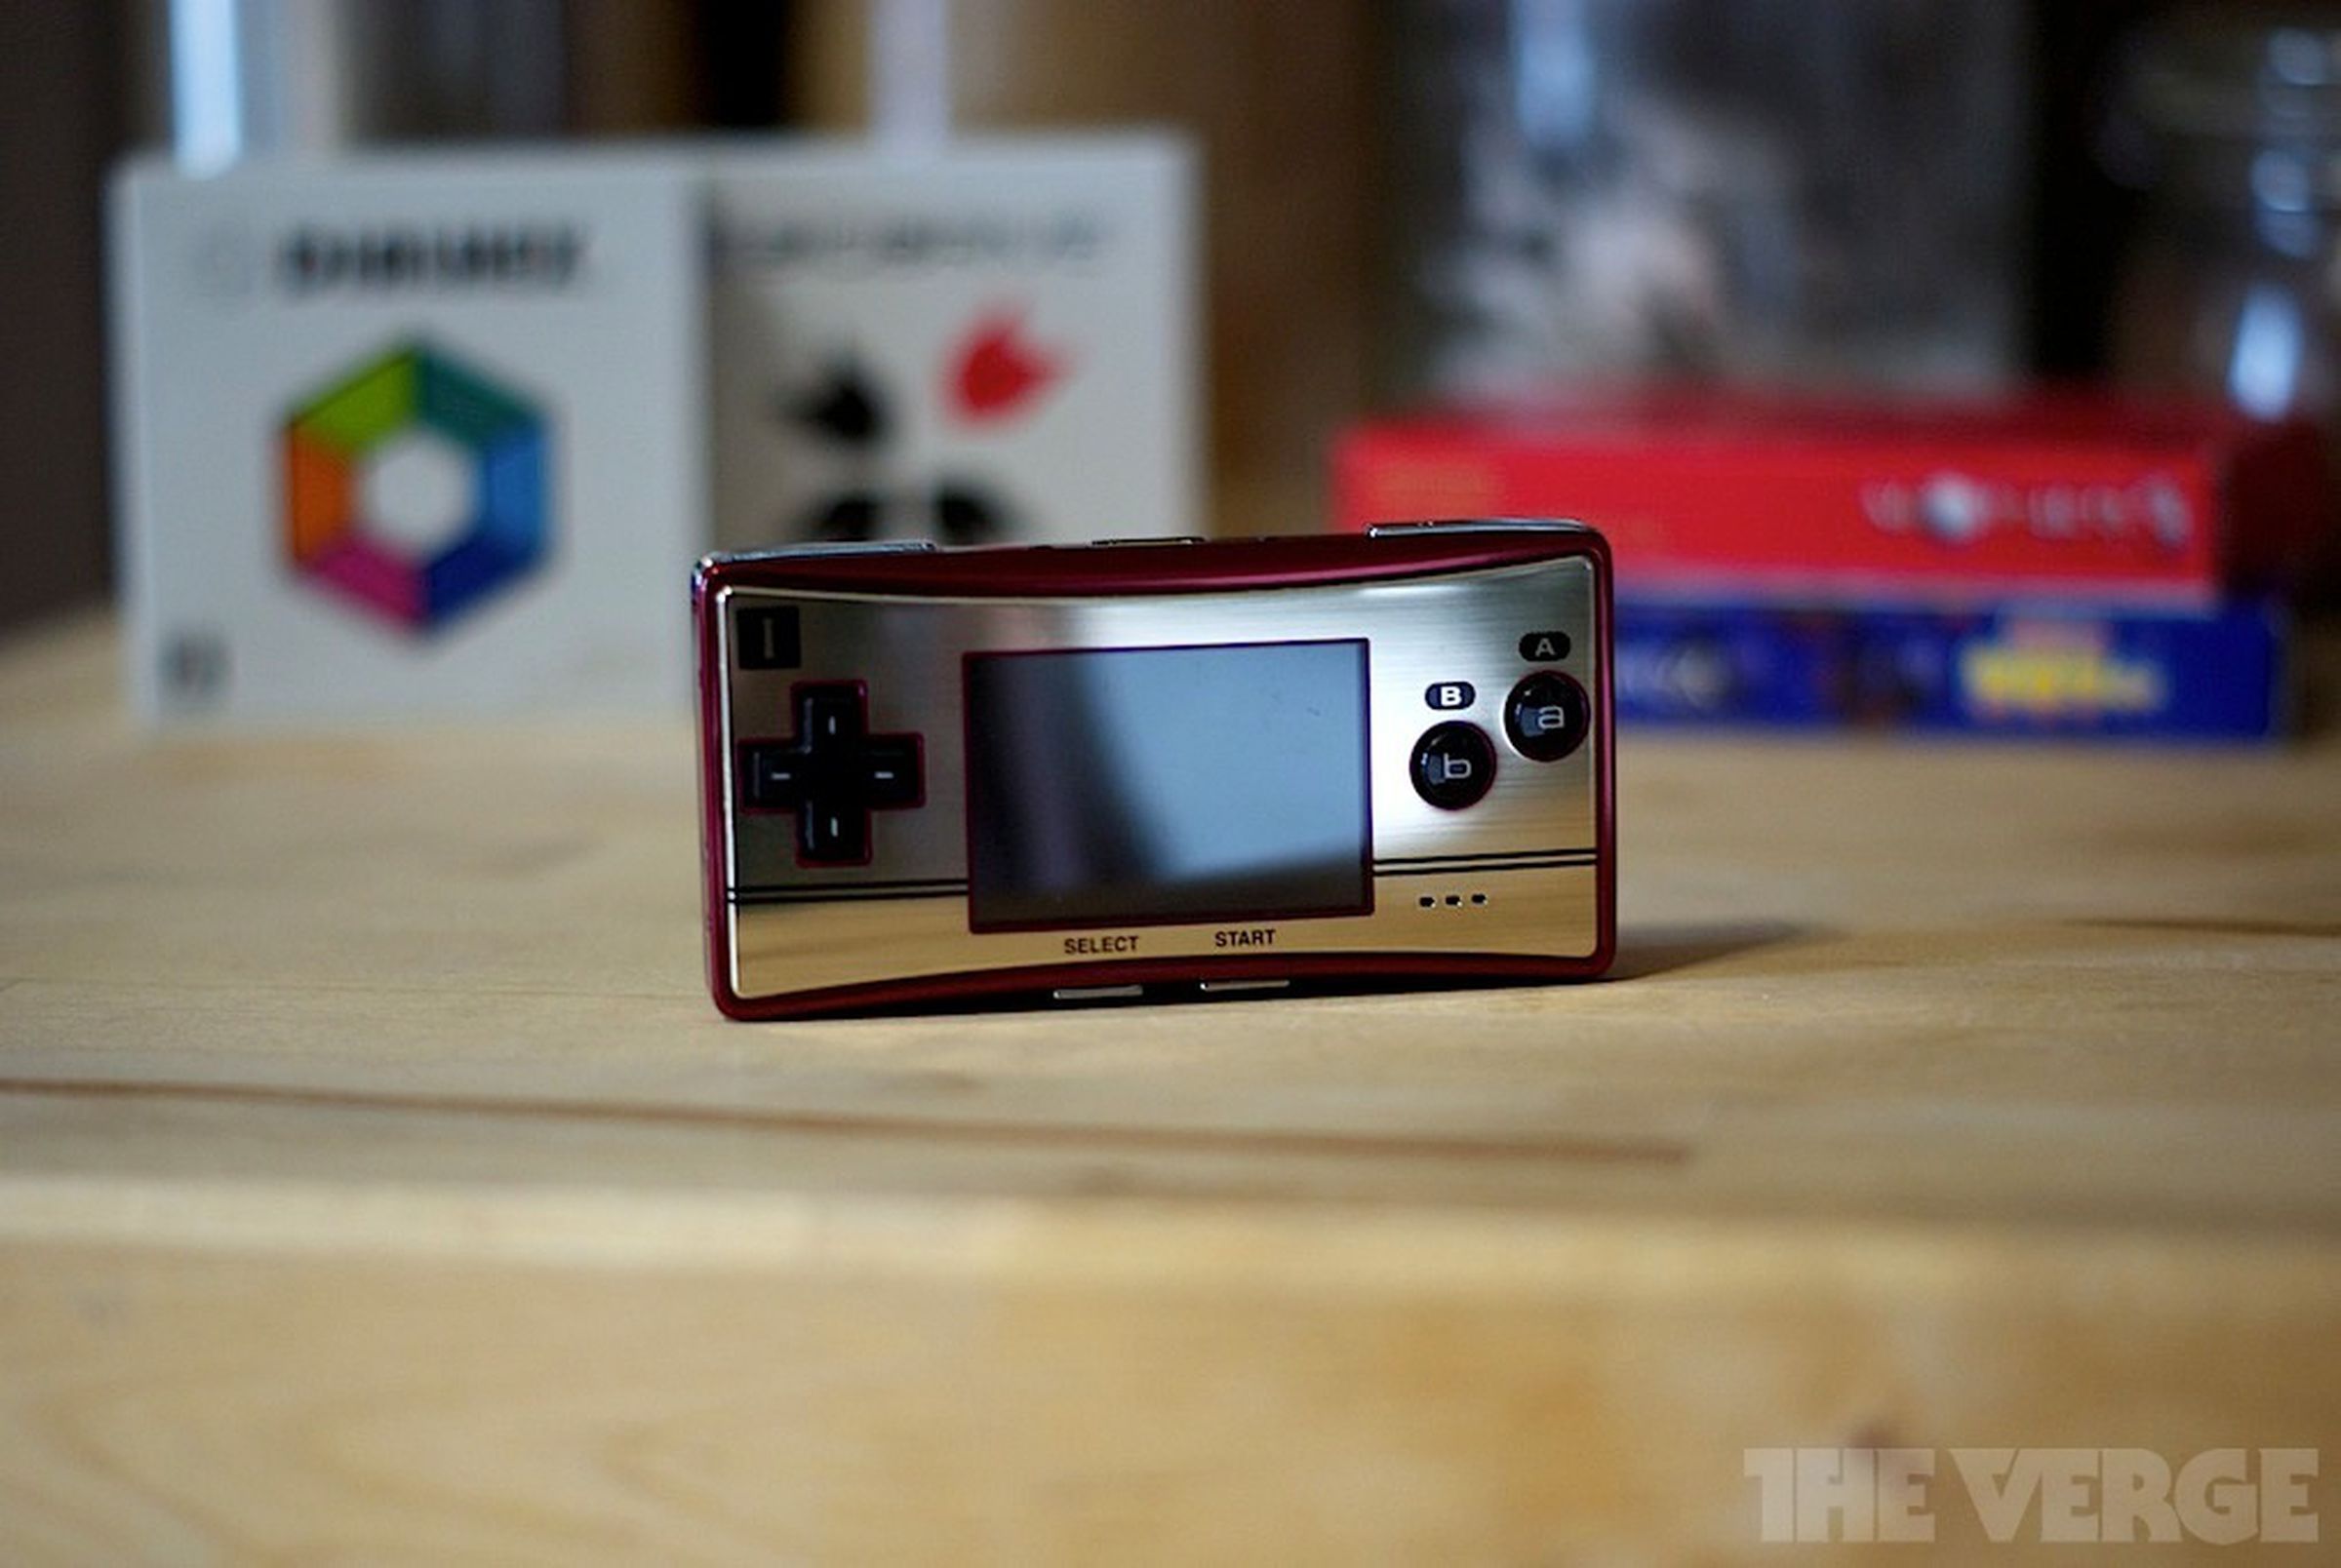 Game Boy Micro hands-on photos